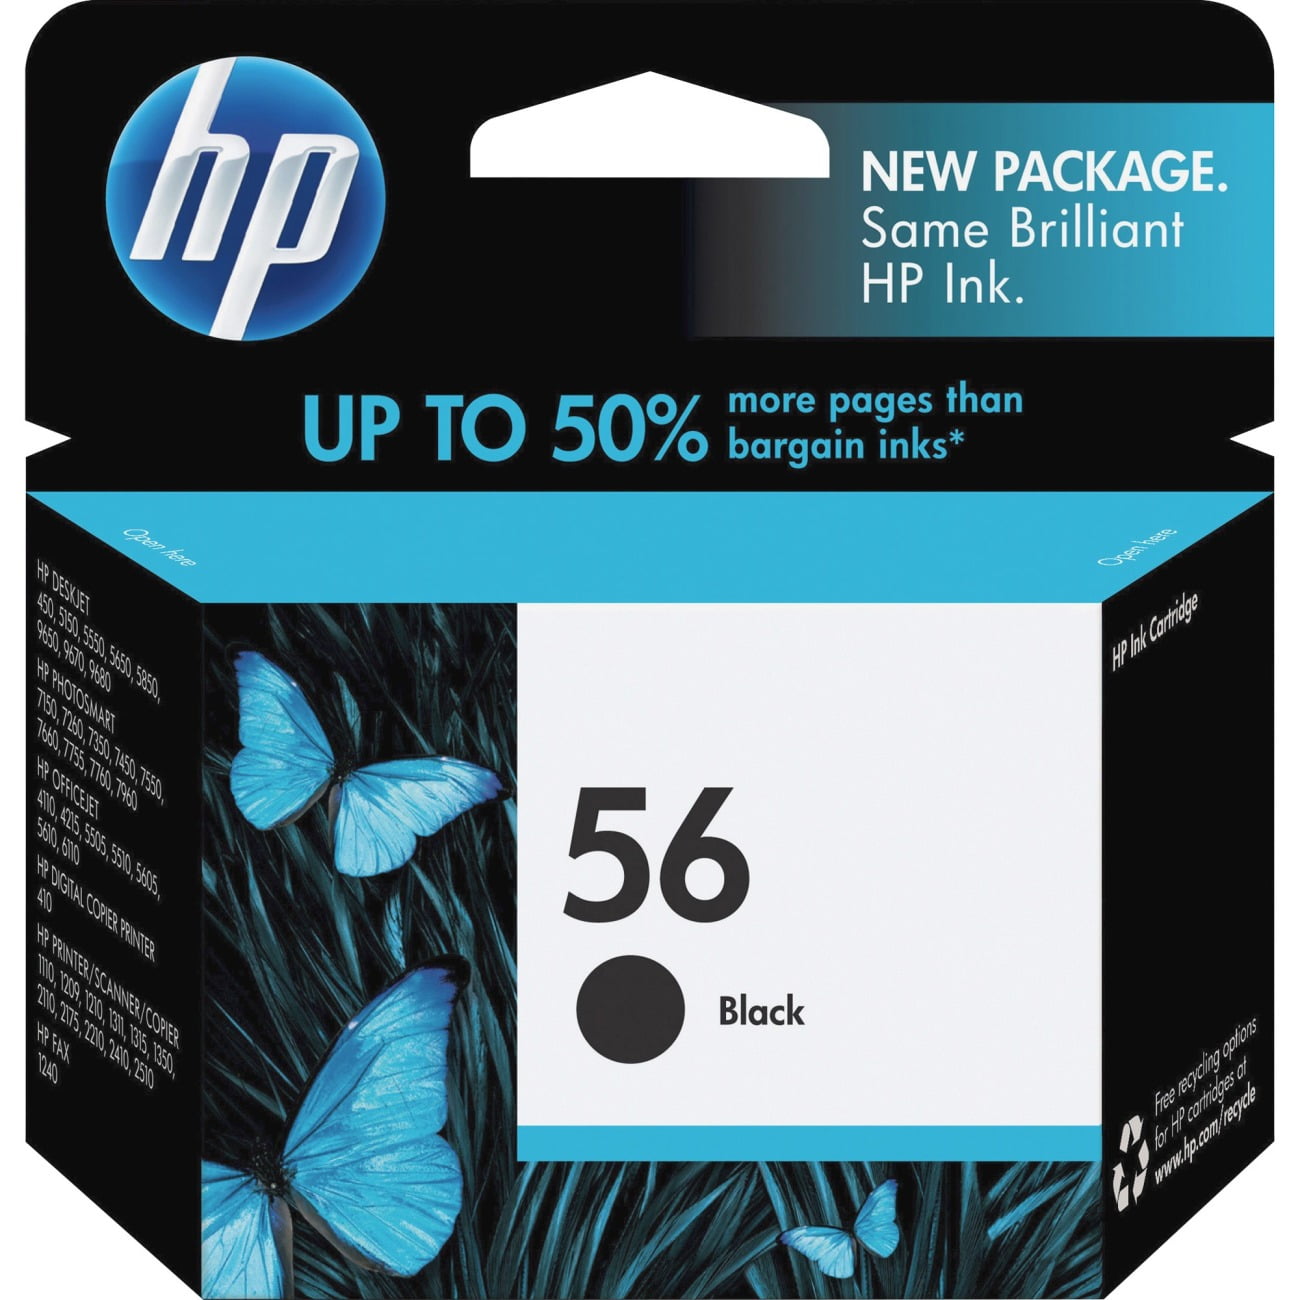 2-PACK HP GENUINE 61 Black & Tri-Color Ink RETAIL BOX DESKJET 3510 3511 3512 